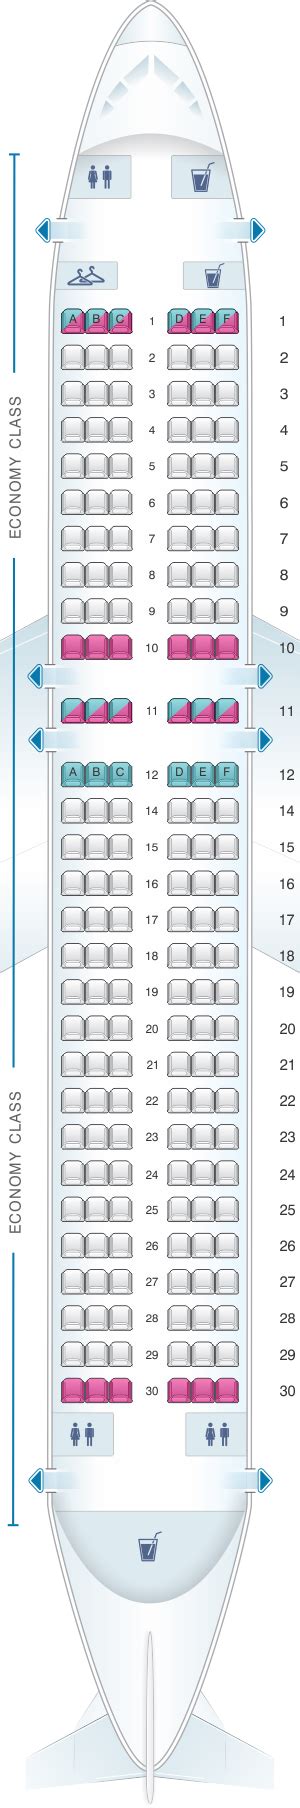 Air France Airbus A320 Seat Map